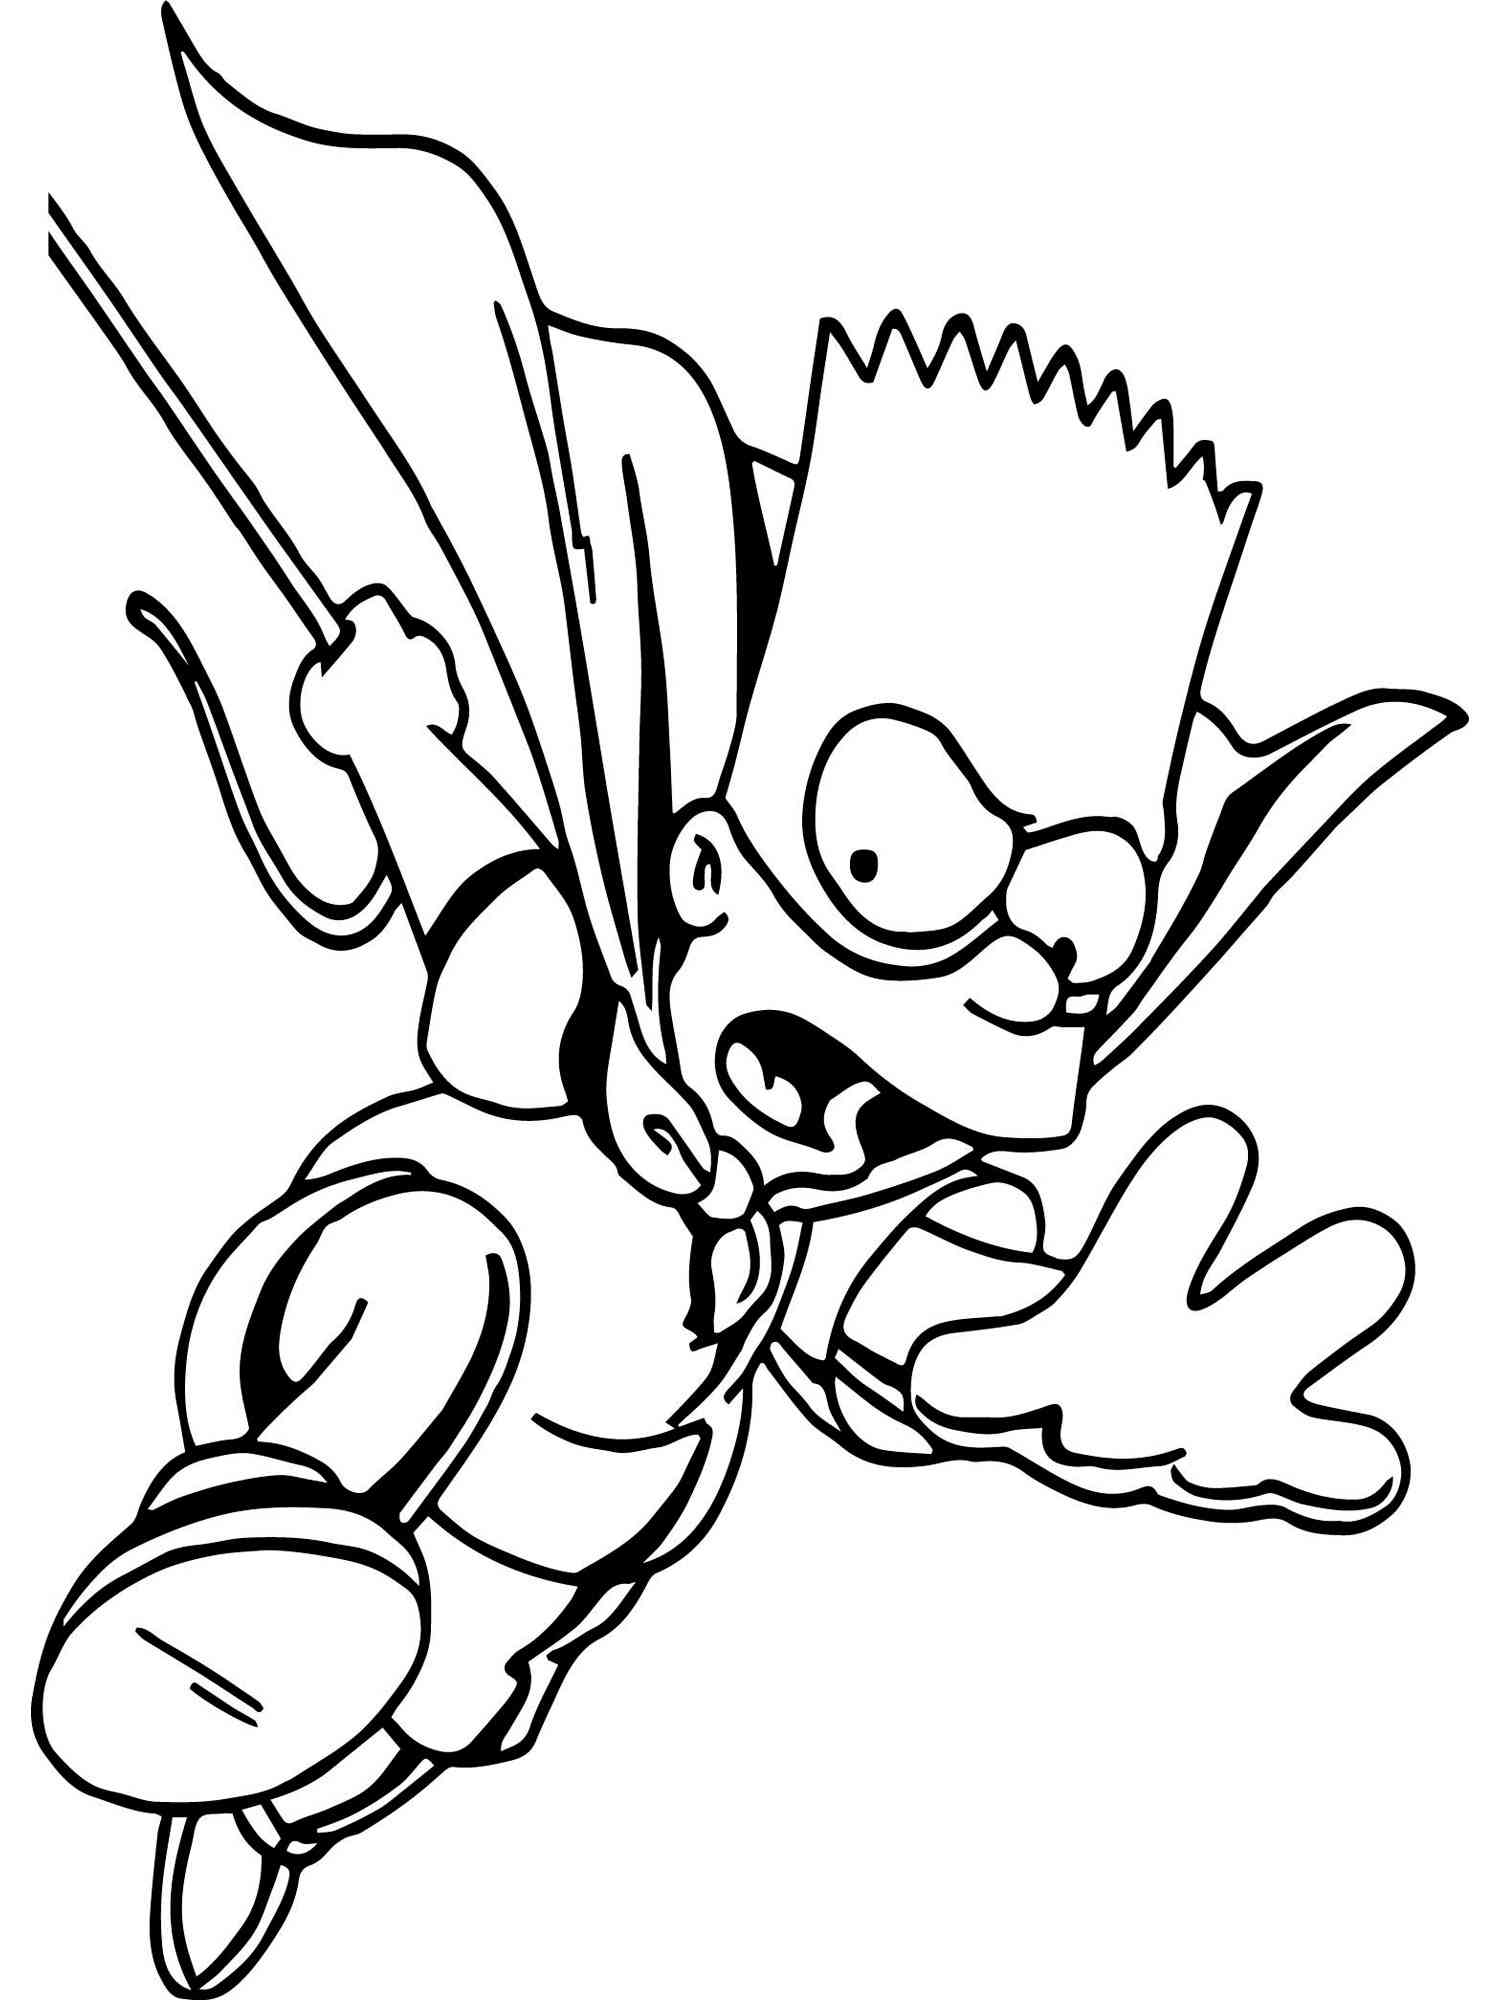 Superhero Bart Simpson coloring page